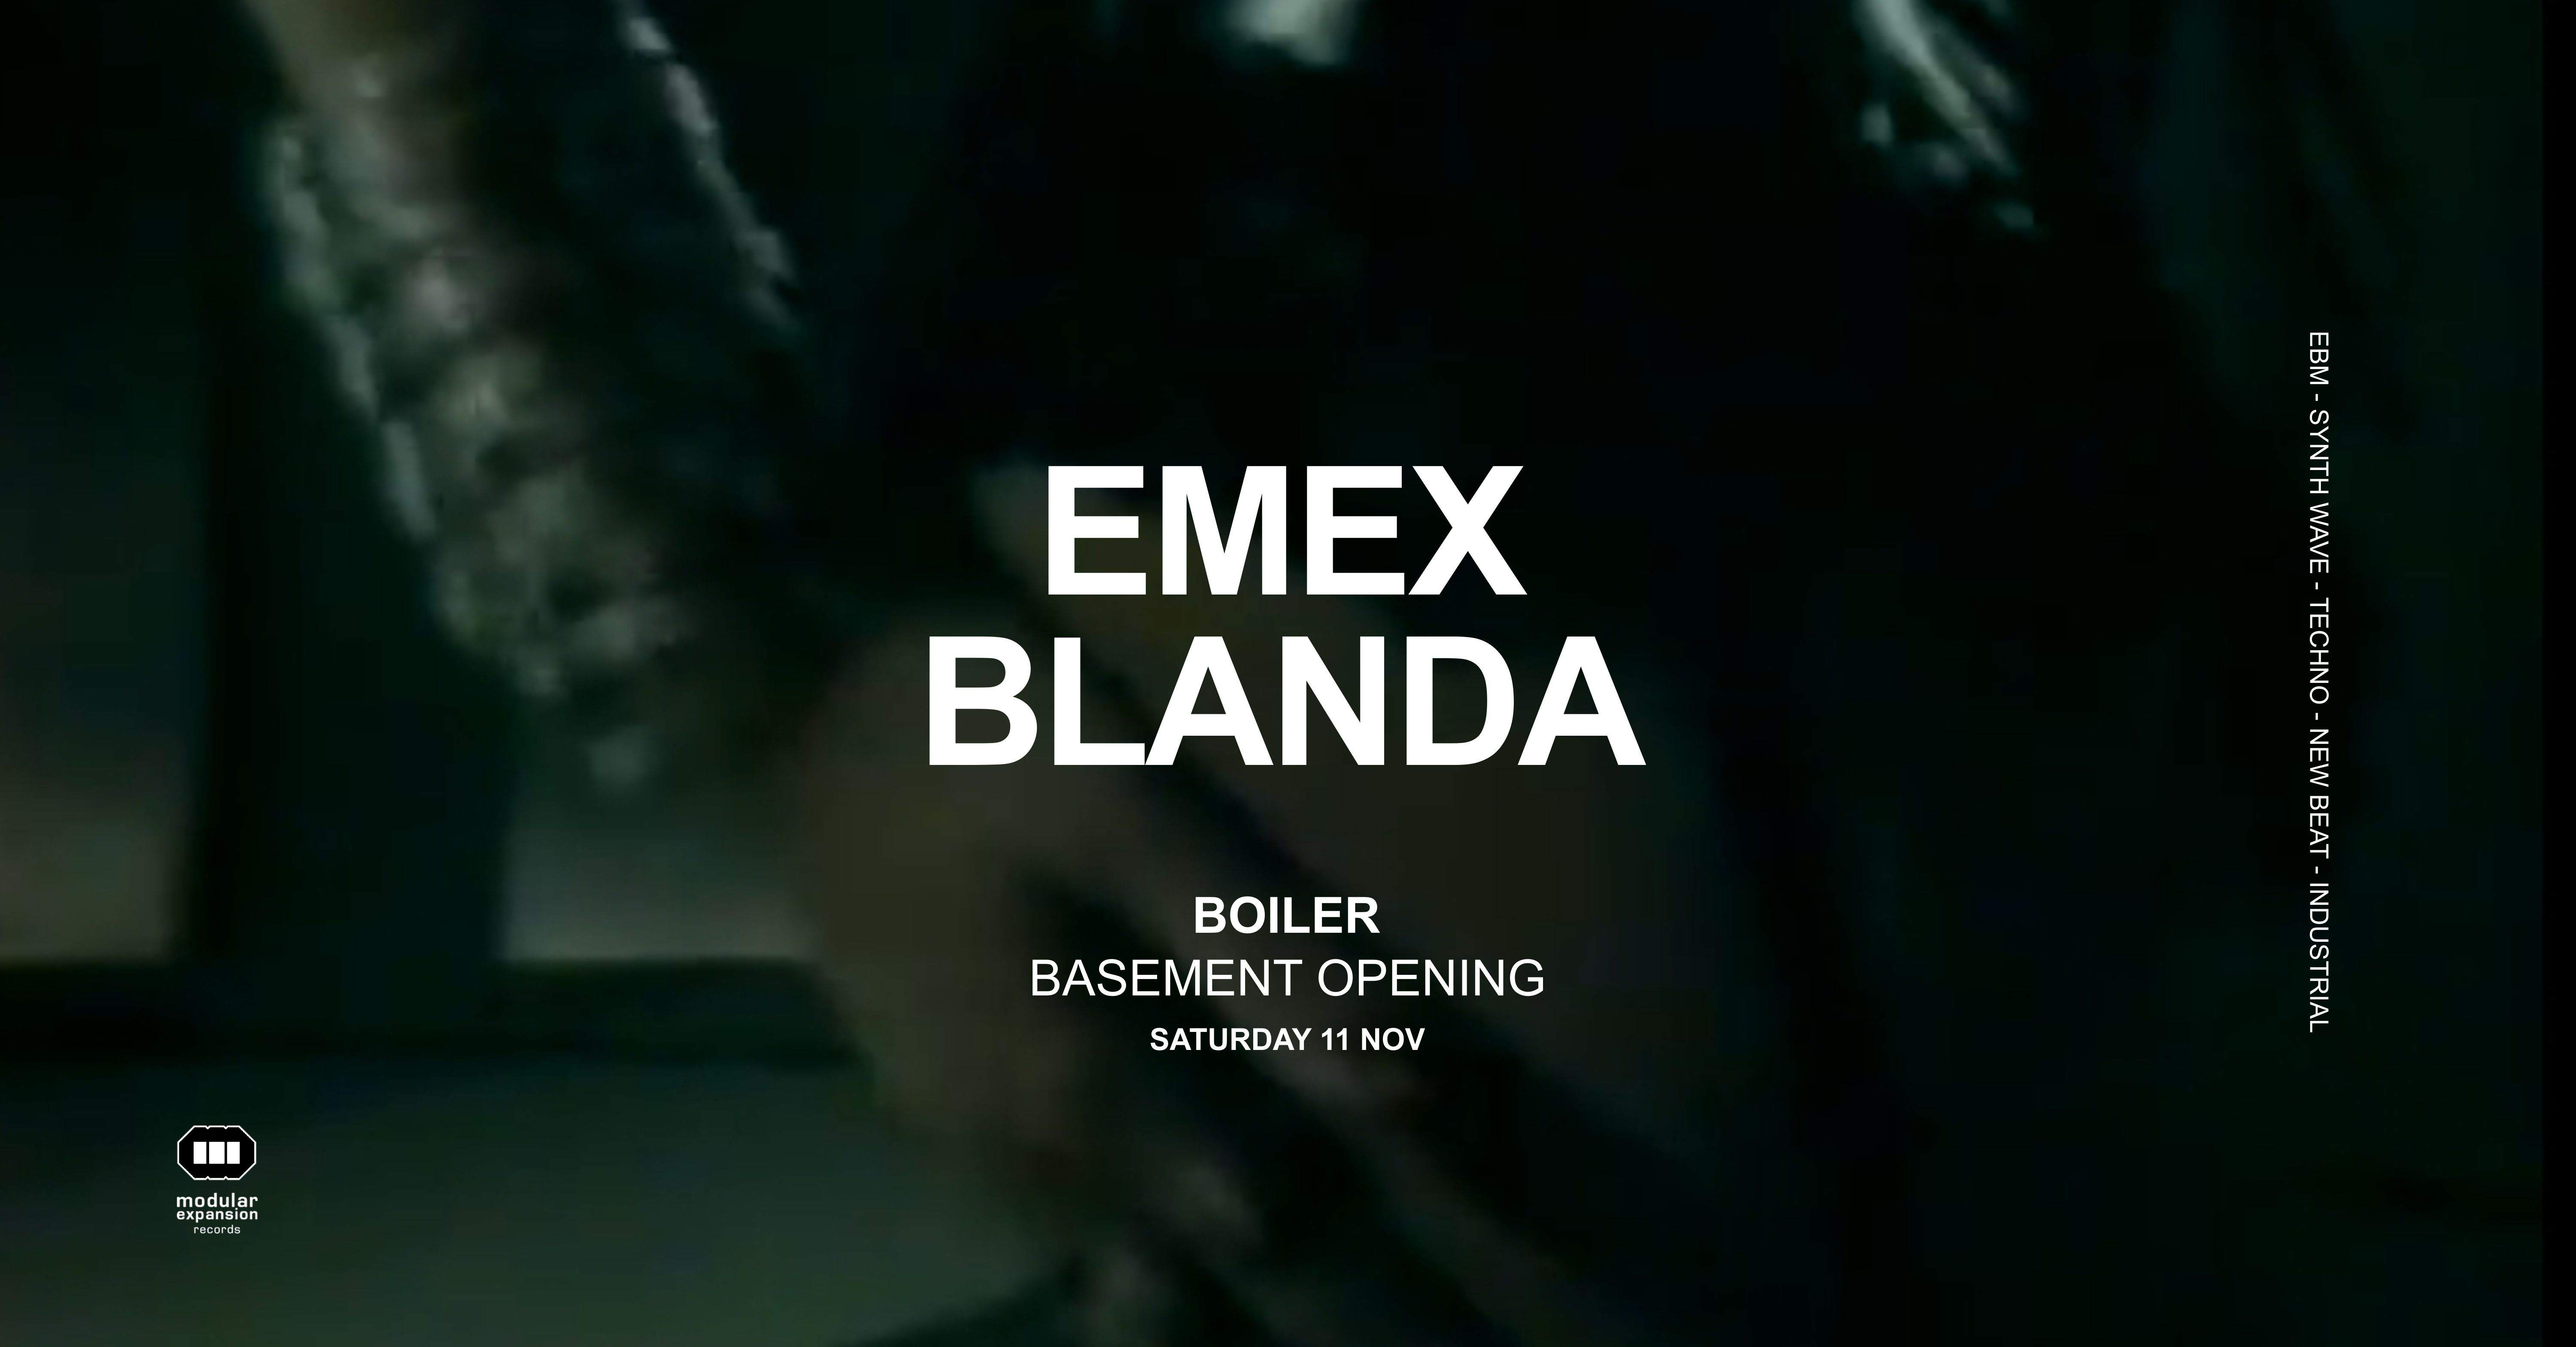 Boiler Basement Opening with Emex & Blanda - フライヤー表